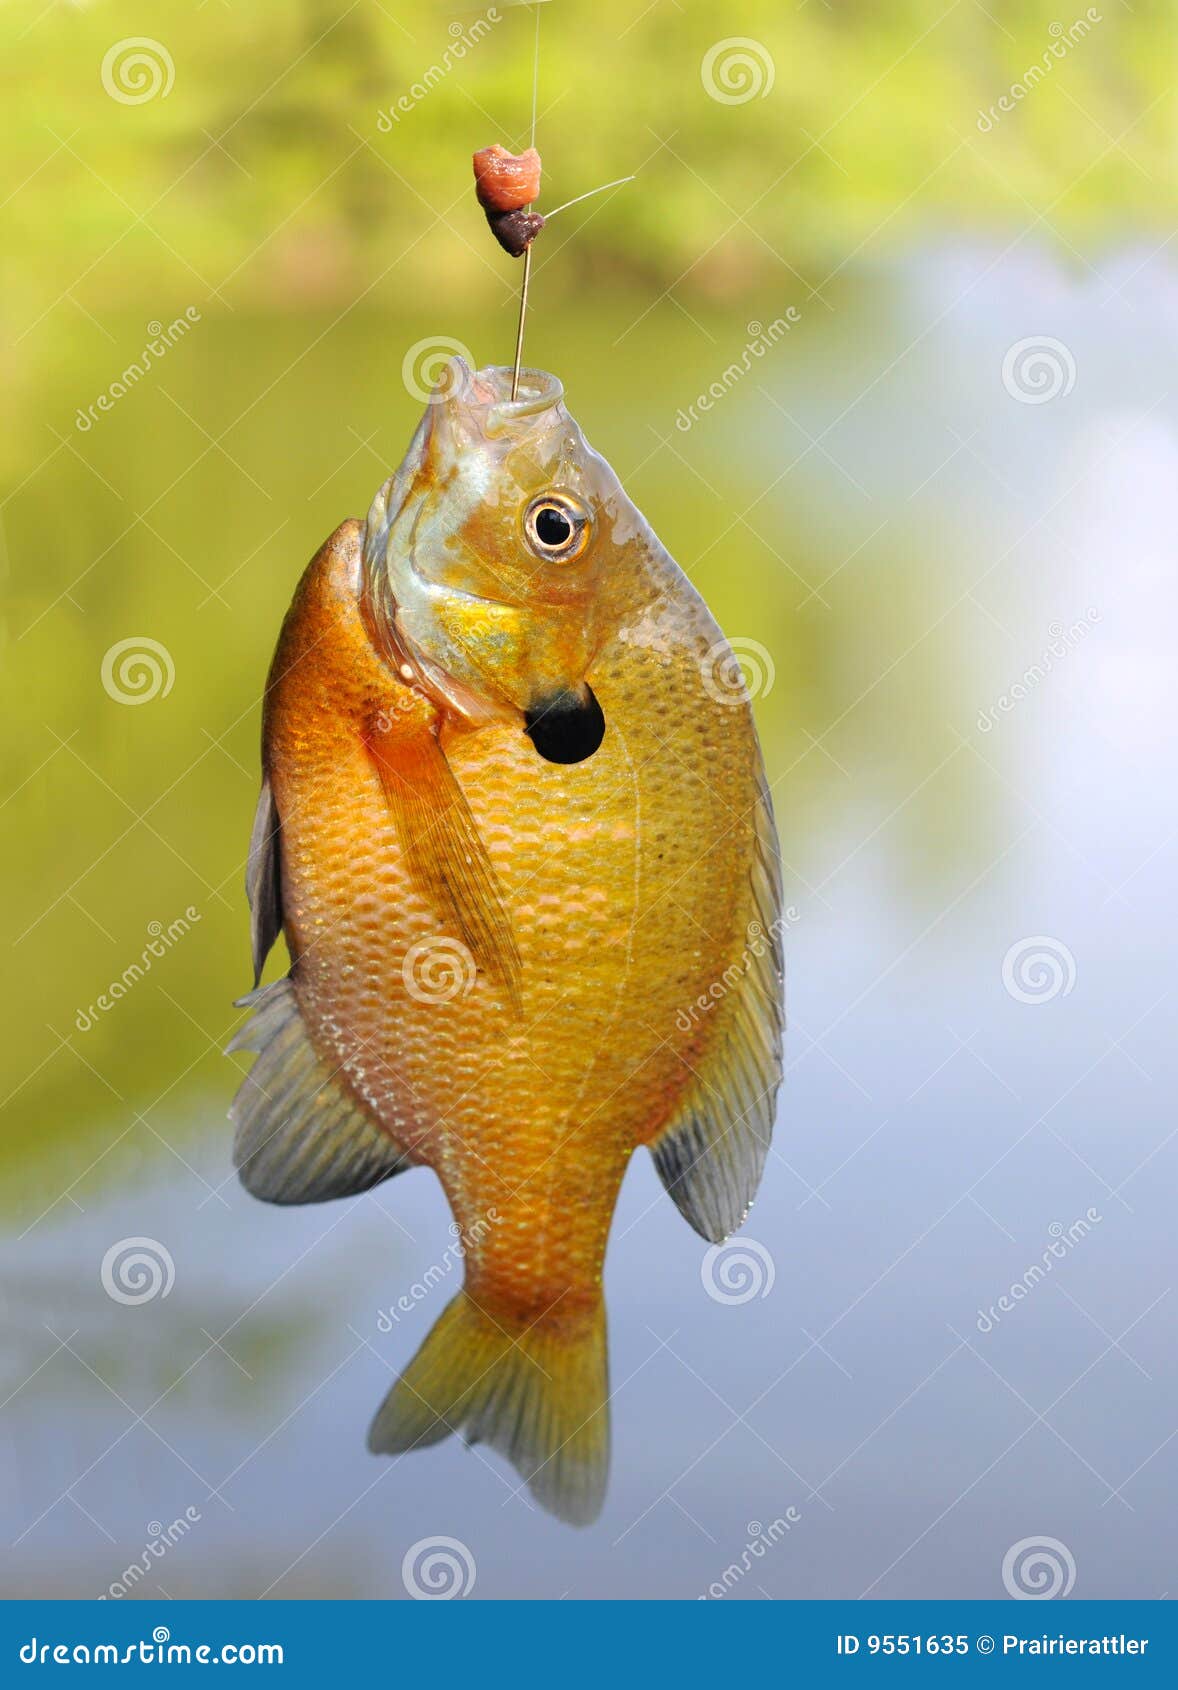 Bluegill Sunfish on a Hook stock image. Image of caught - 9551635